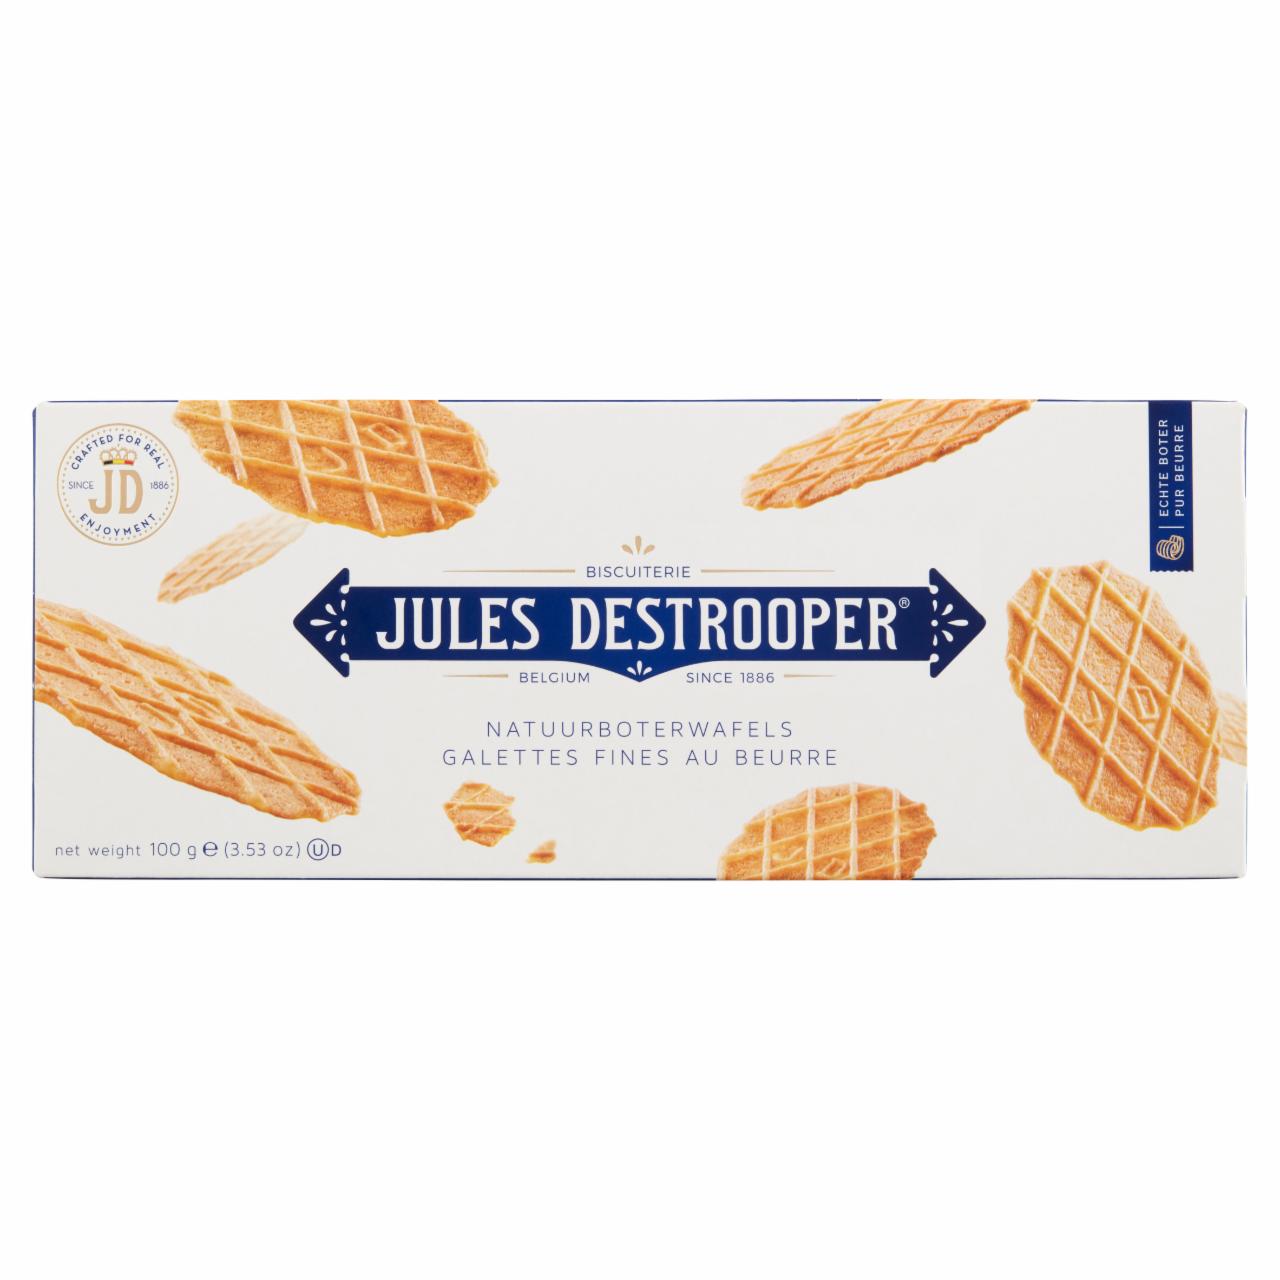 Képek - Jules Destrooper vajas finomkeksz 100 g